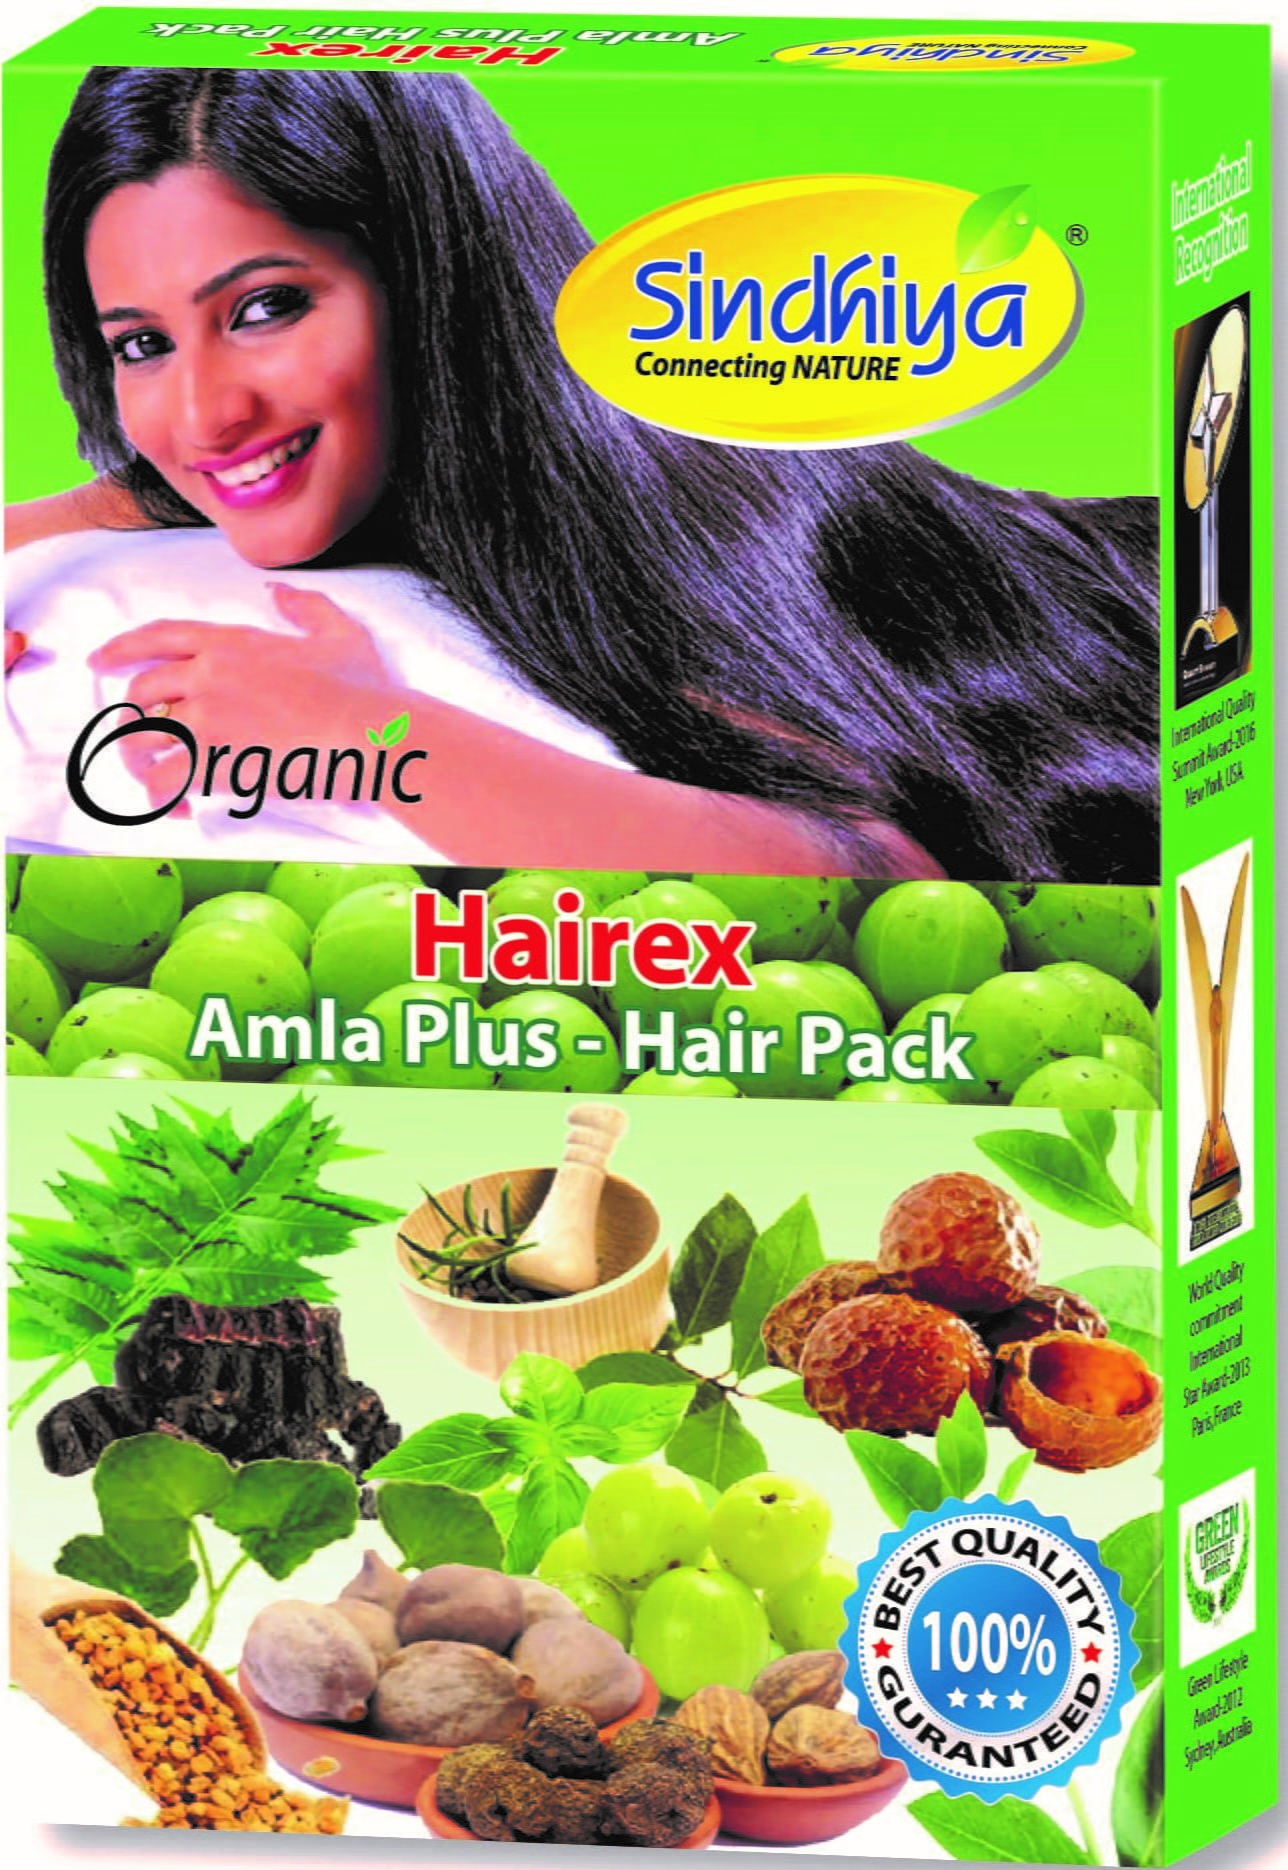 Sindhiya Hairex - Amla Plus - Hair Pack 70g 2